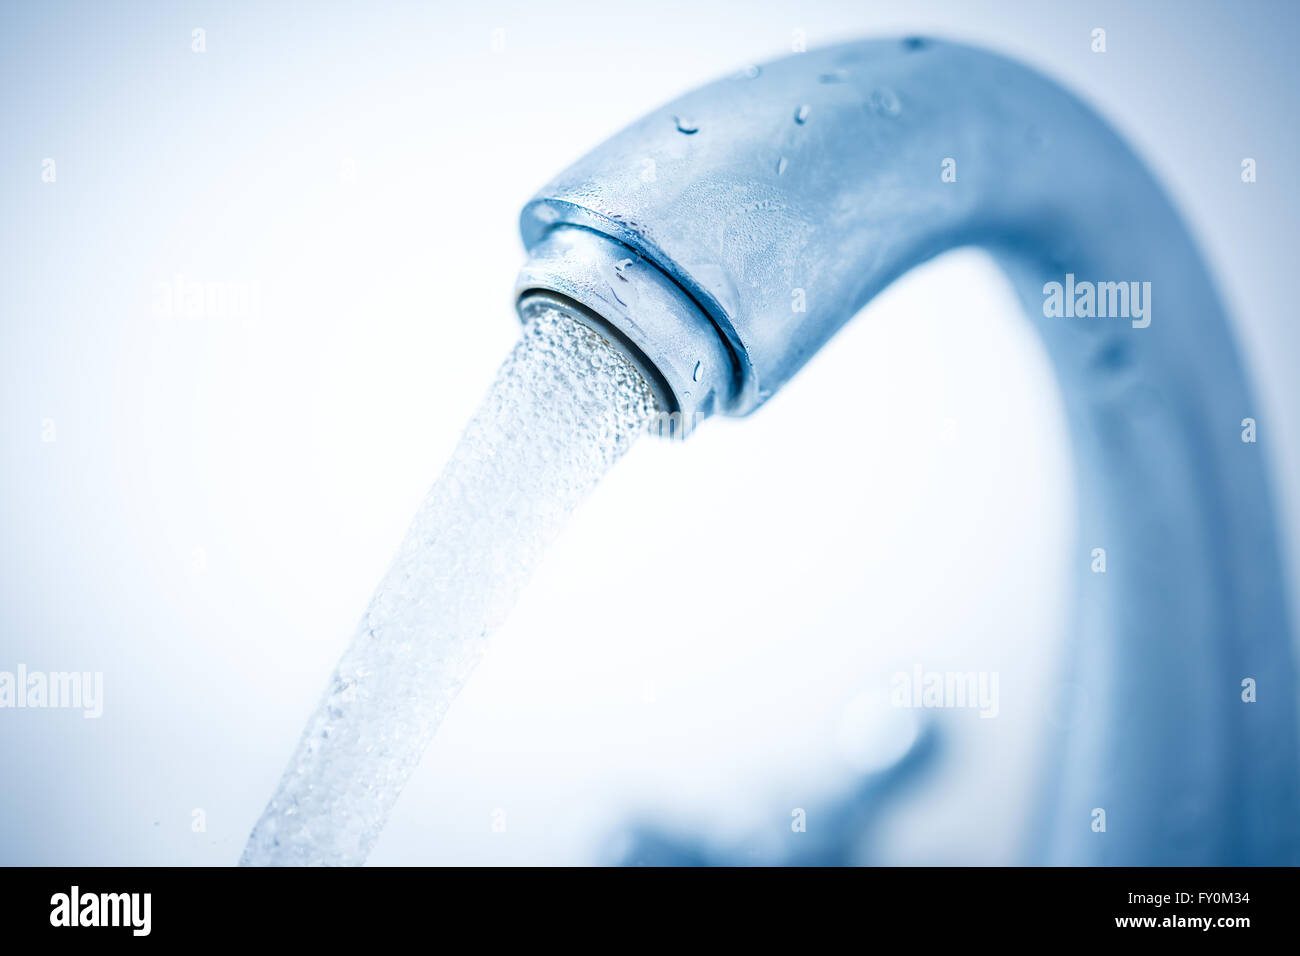 Running water tap closeup in toning Stock Photo